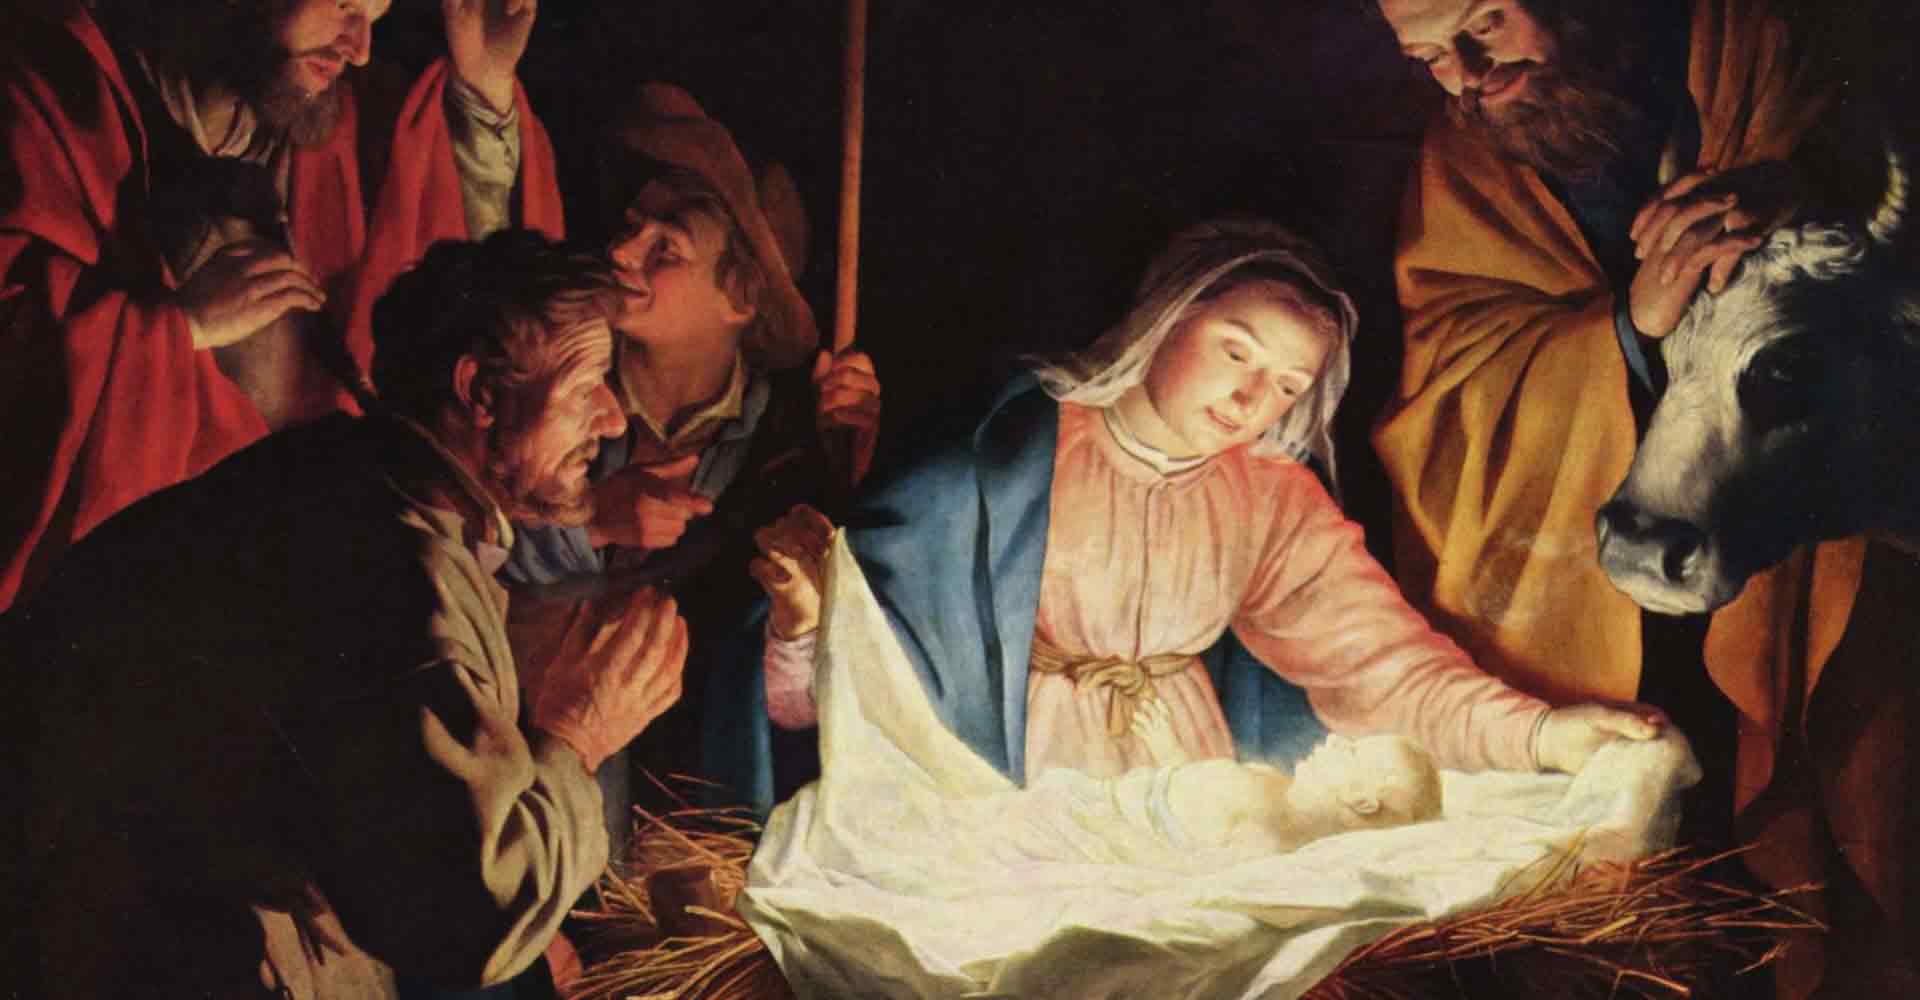 Nativity, Birth of Christ, Incarnation